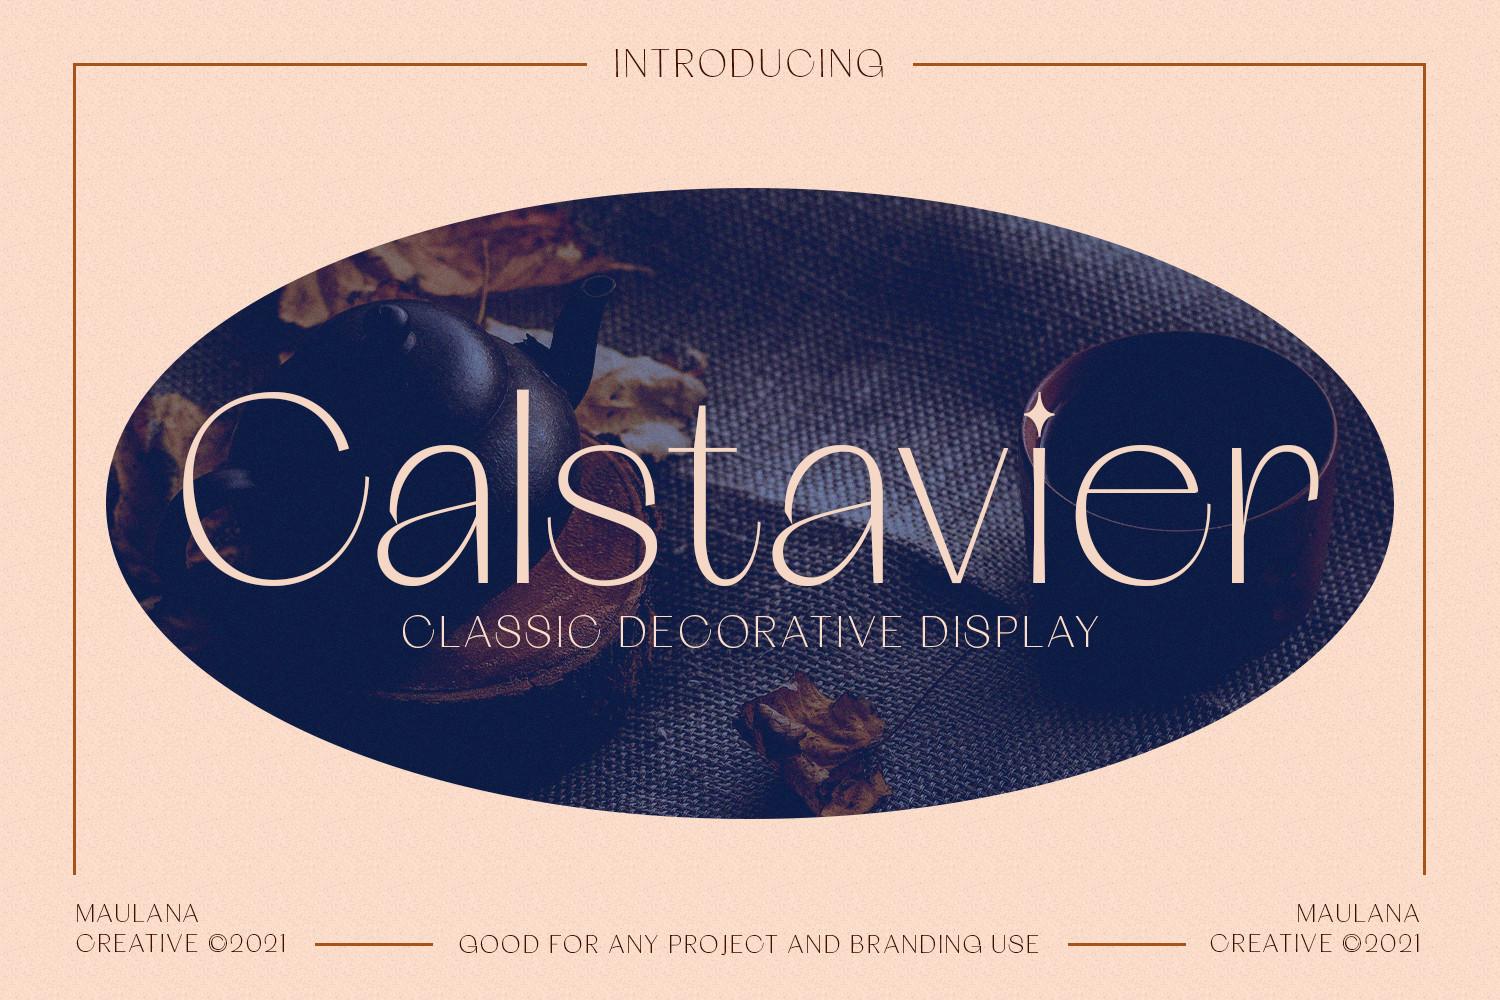 Calstavier Font